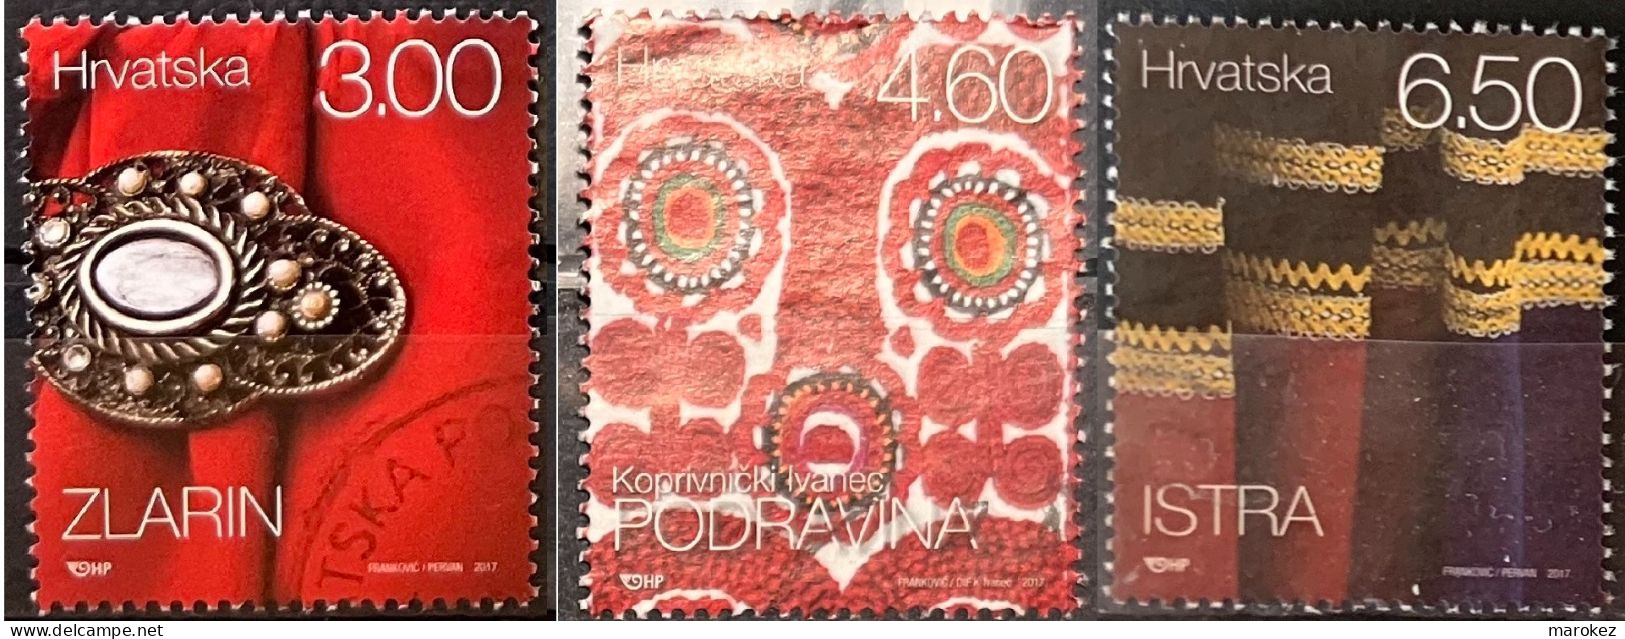 CROATIA 2017 Ethnographical Heritage - Fabric; Zlarin, Istra & Podravina Postally Used Stamps MICHEL # 1268,1269,1271 - Croazia